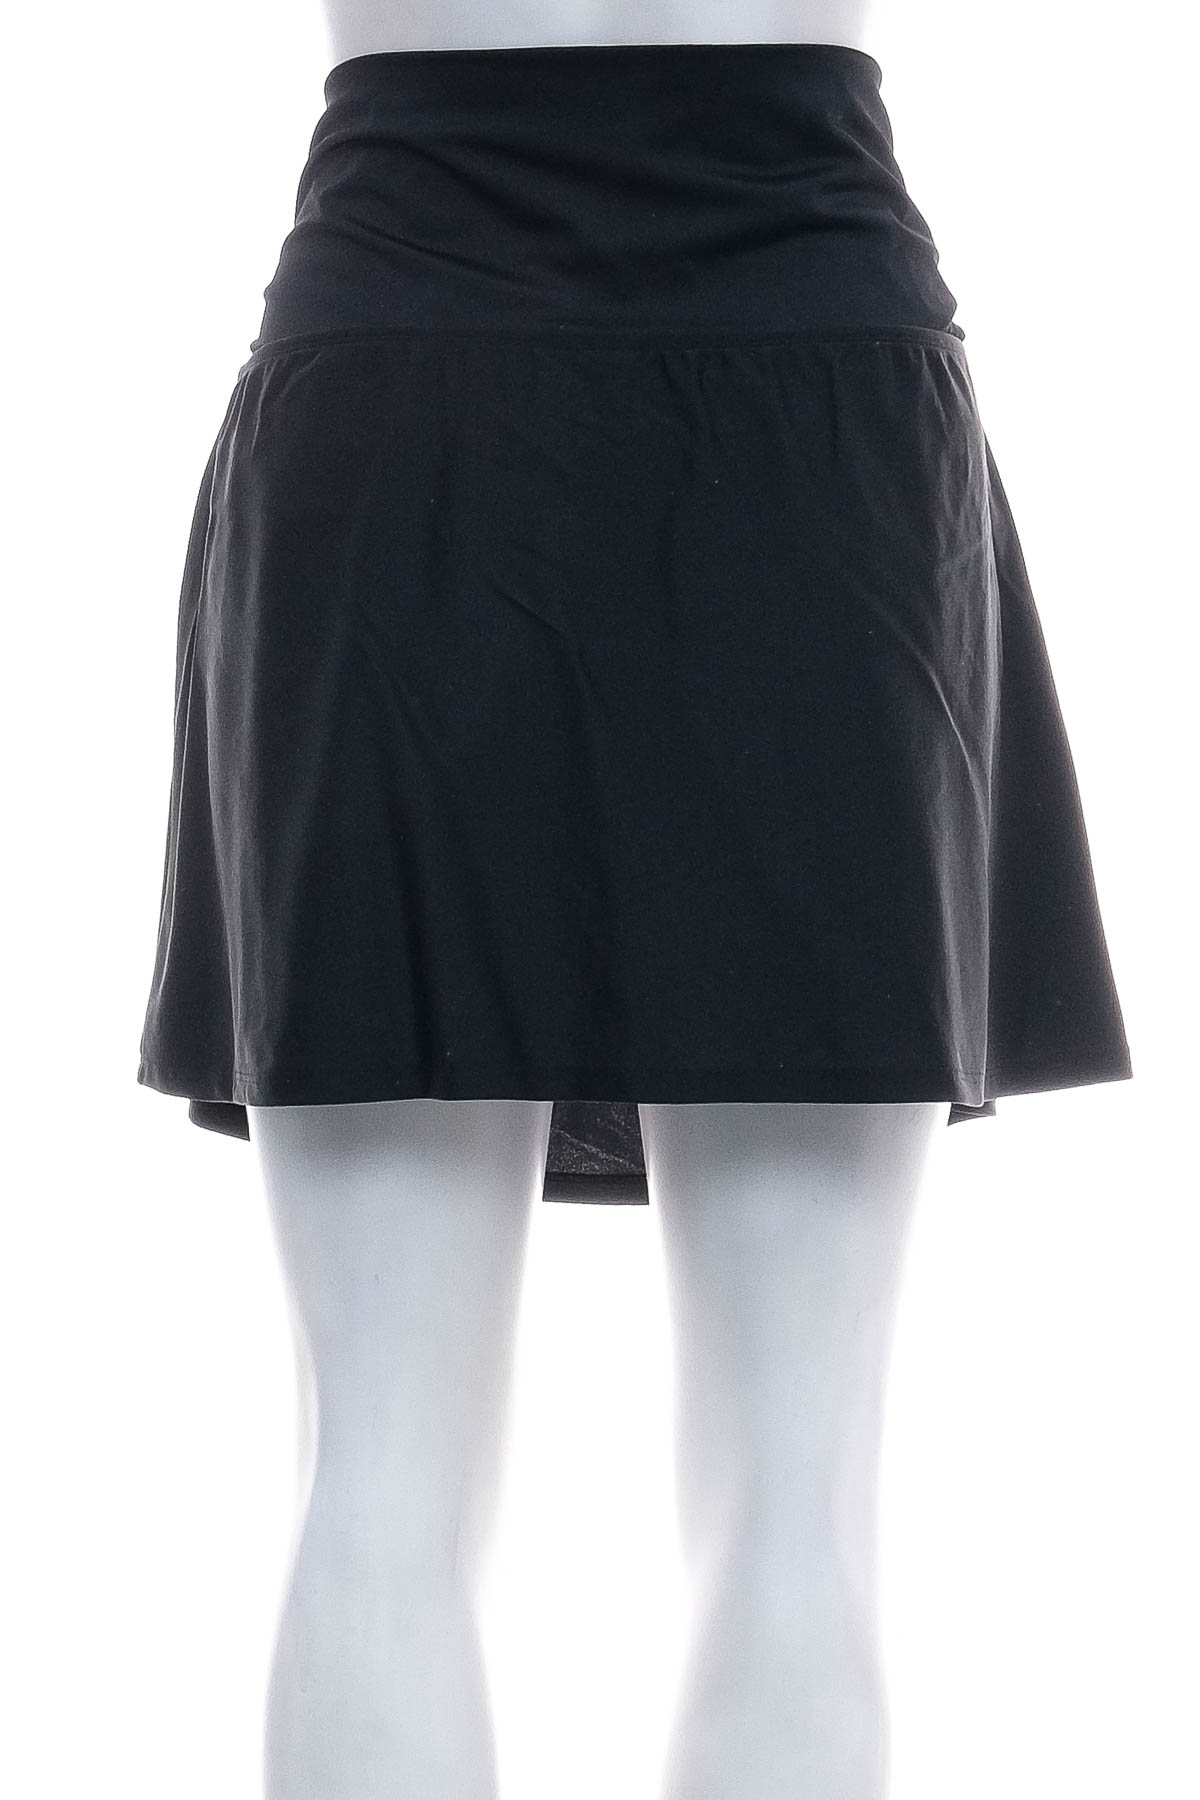 Spodnie spódnicowe - Bpc selection bonprix collection - 1